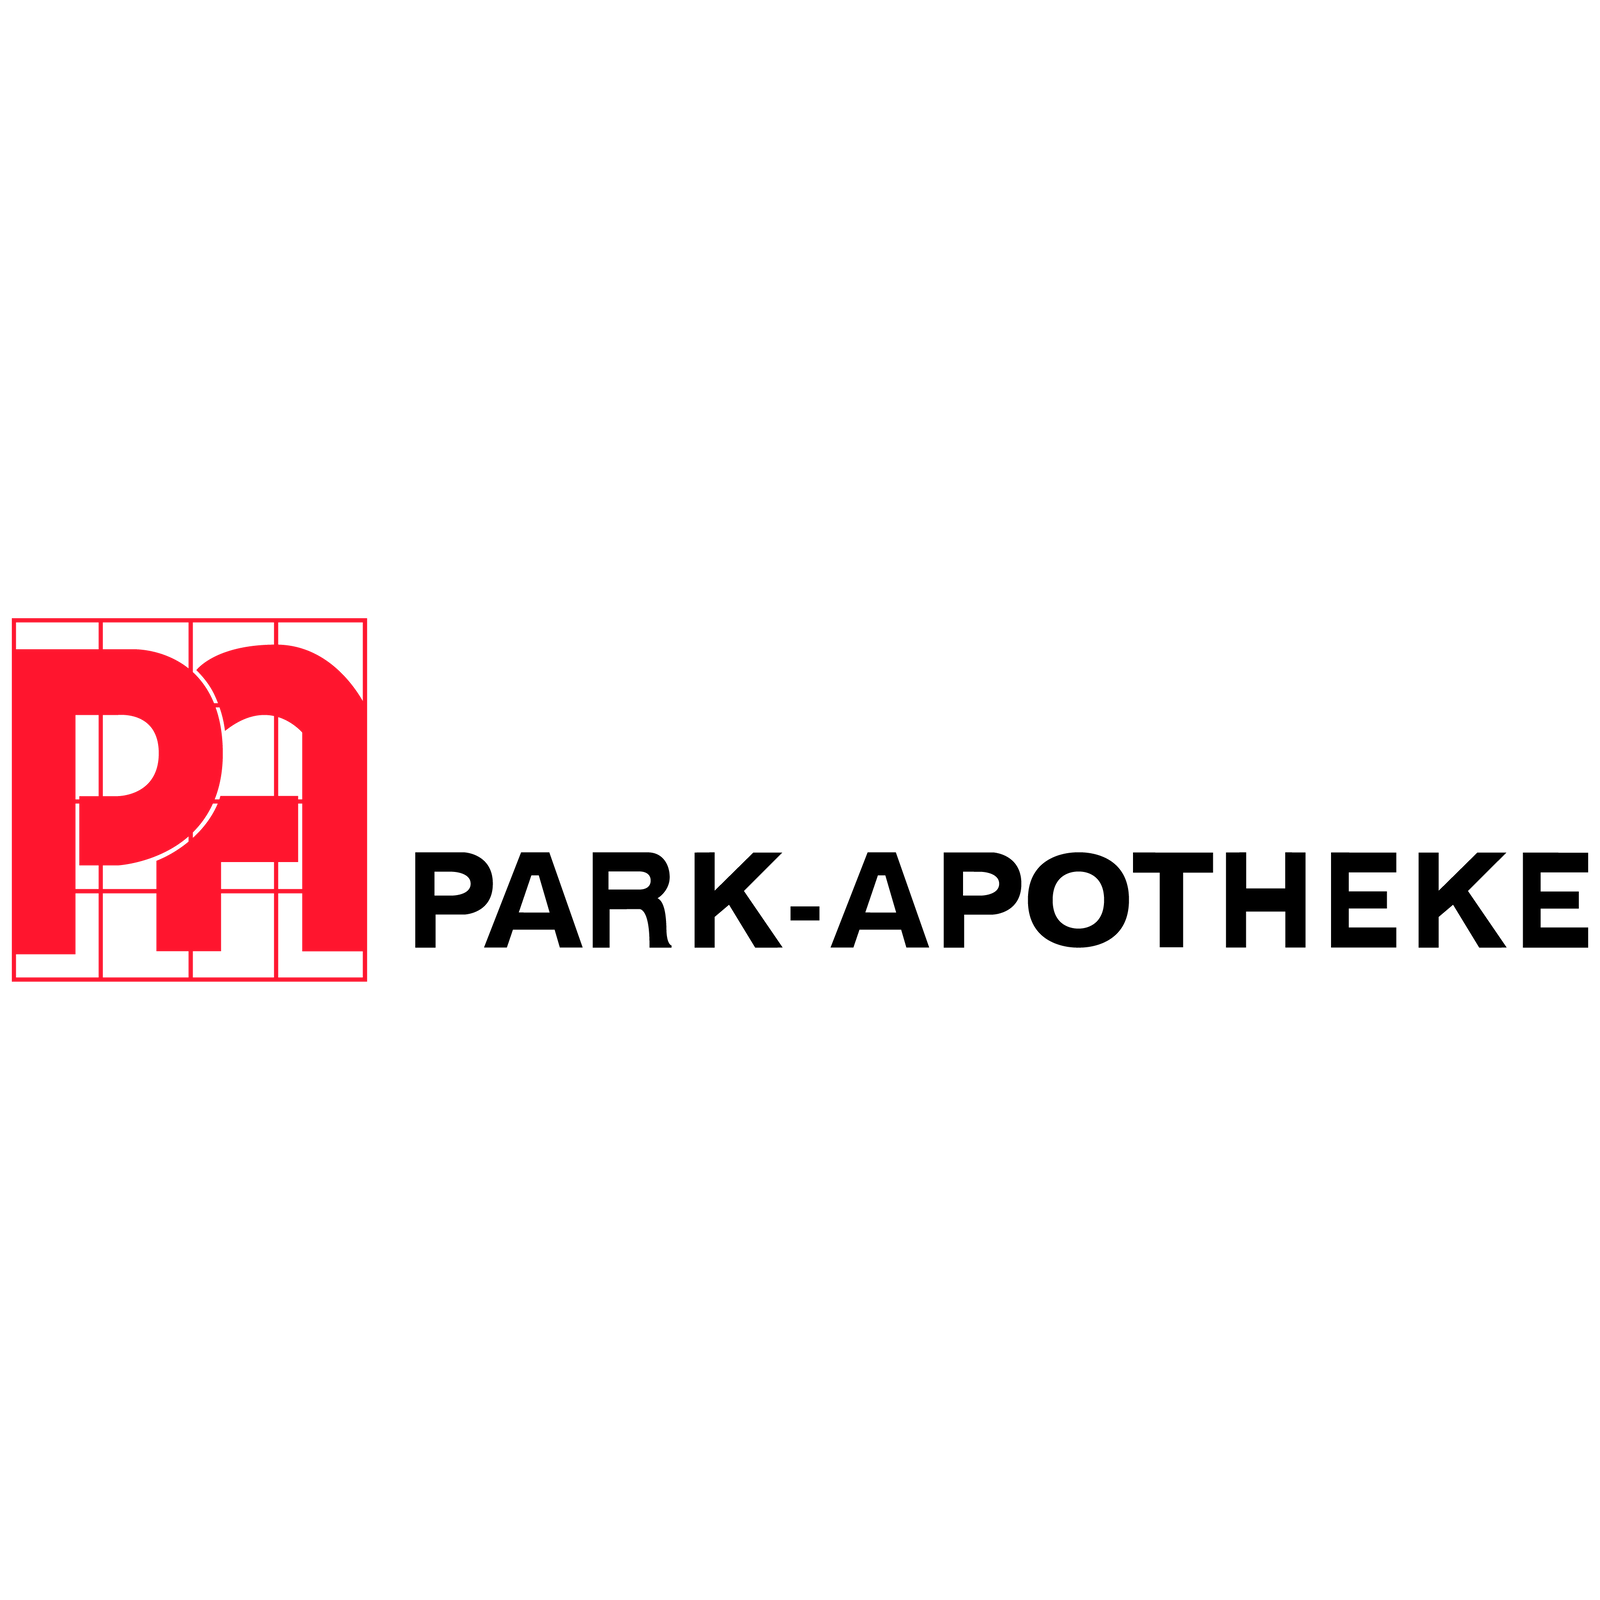 Park-Apotheke in Arnsberg - Logo